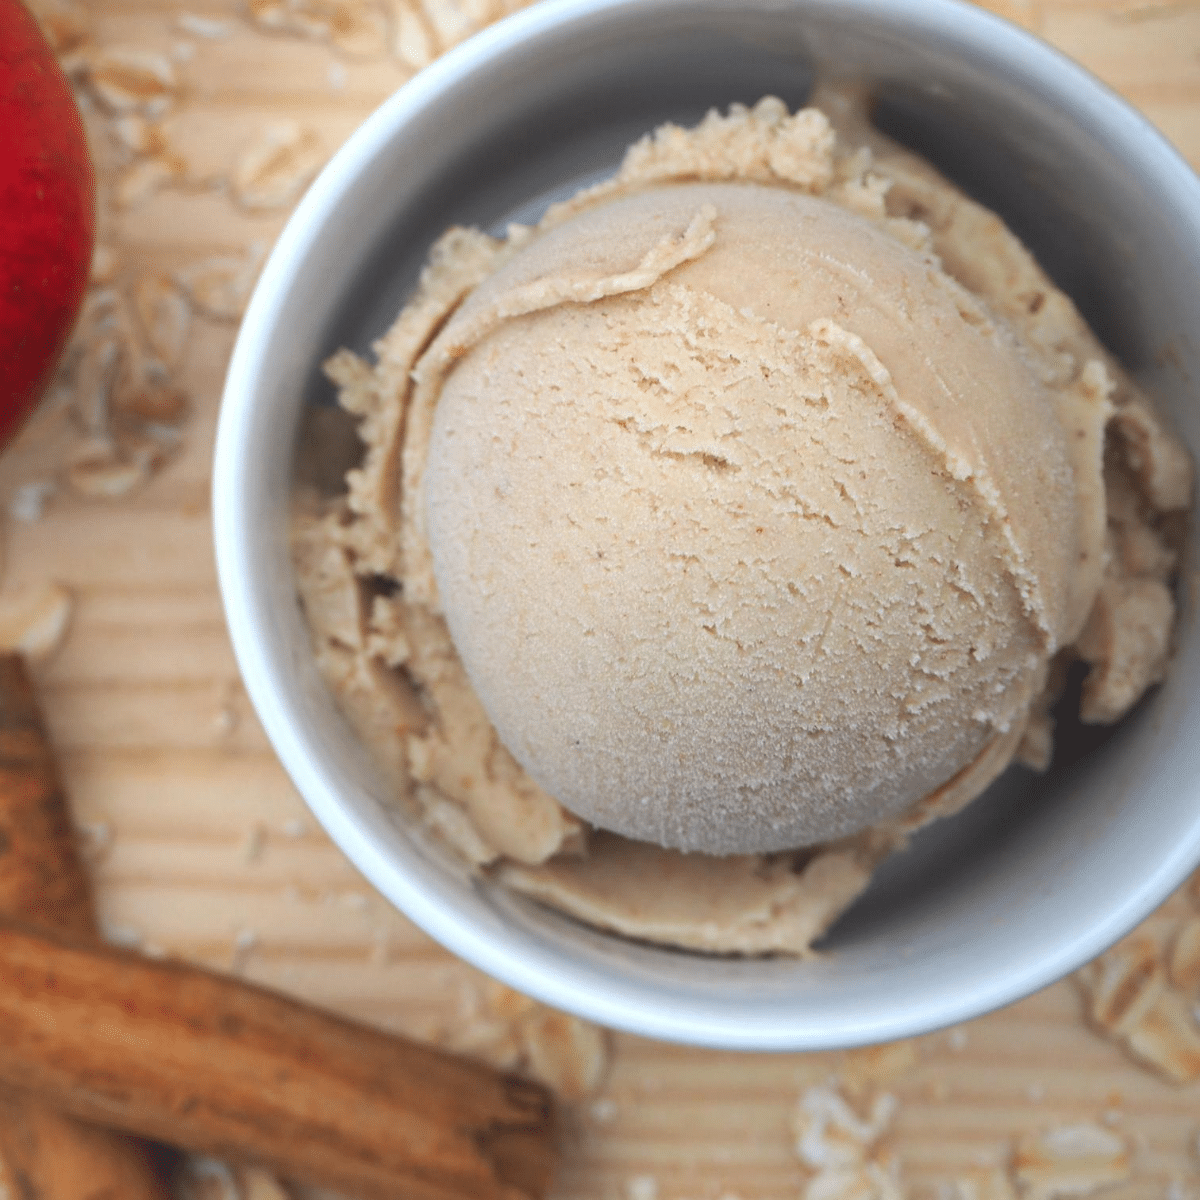 Apple, cinnamon and oat ice cream